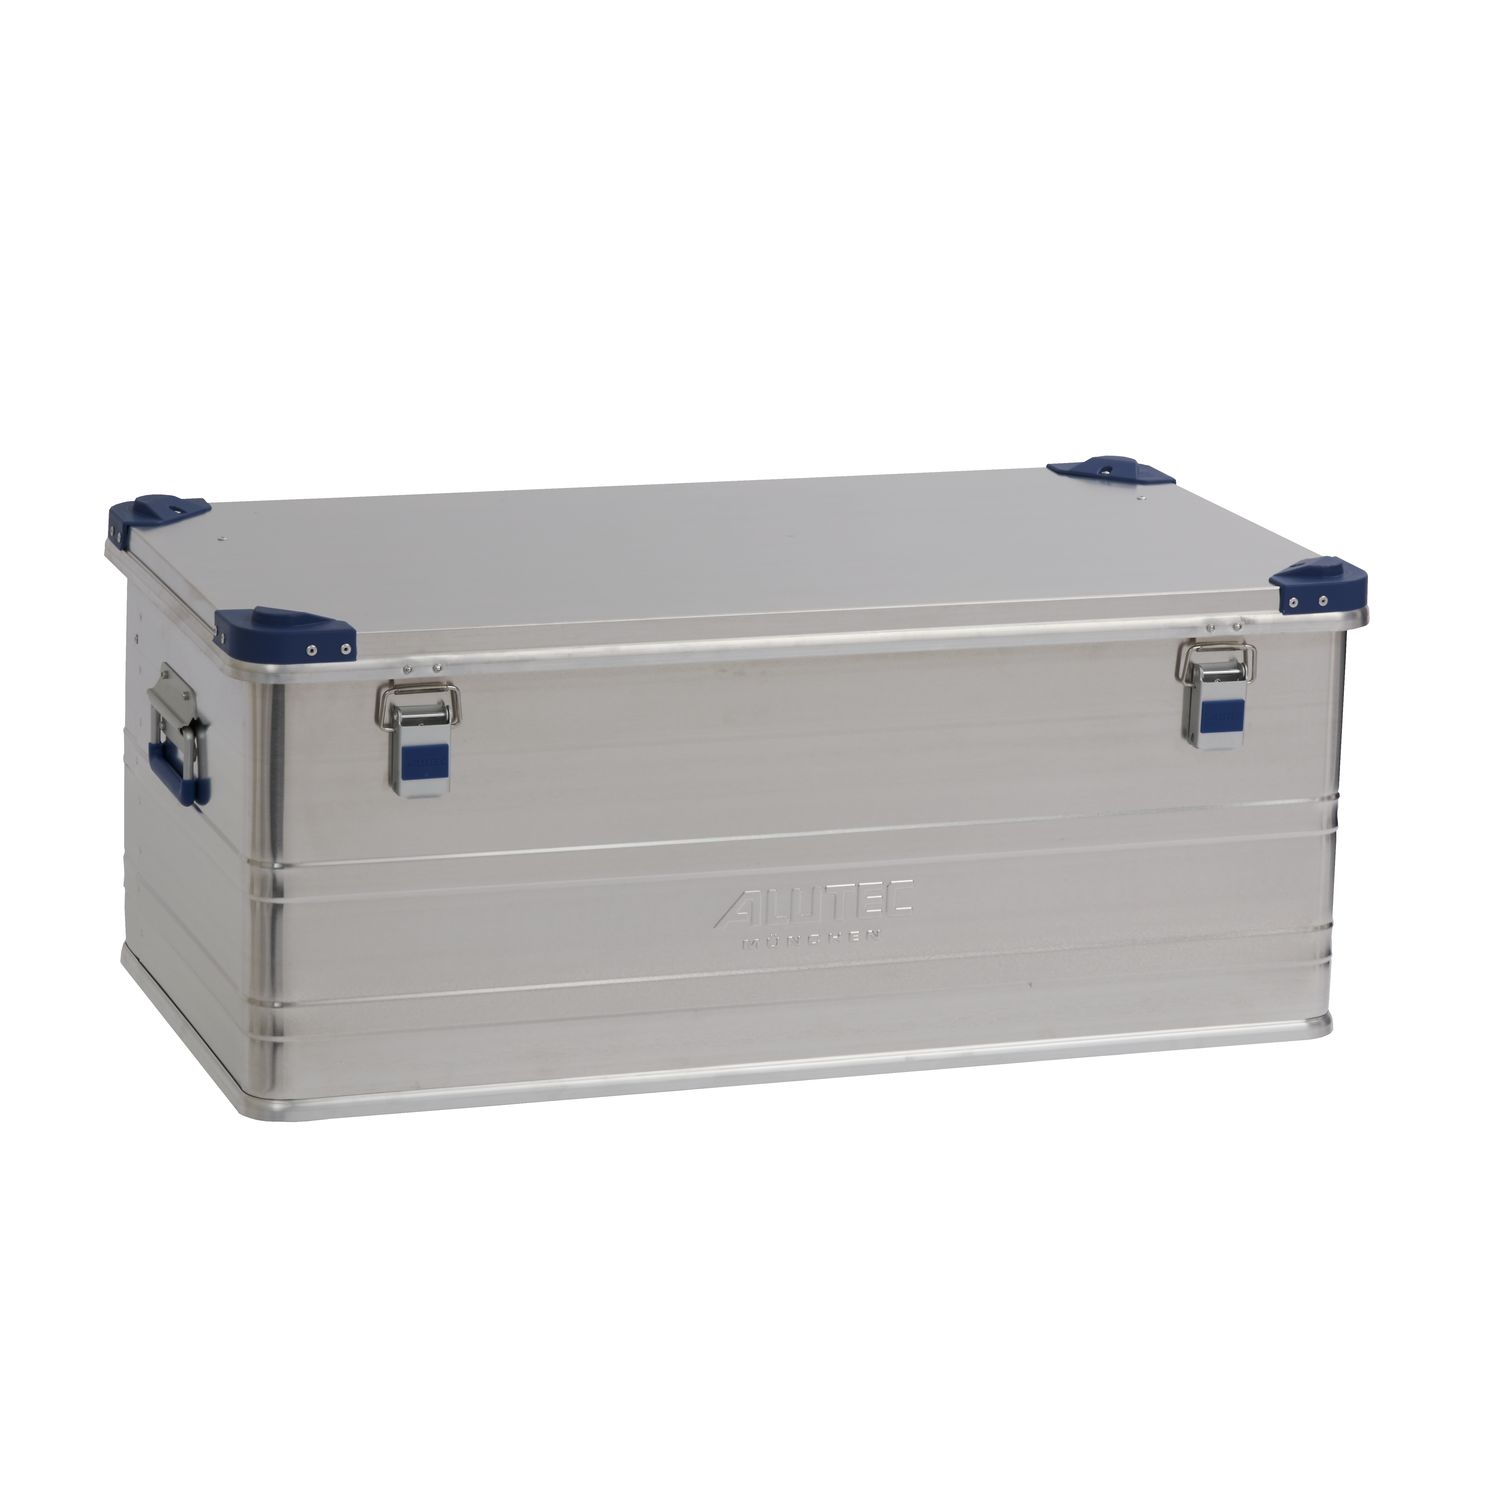 Alutec Aluminiumbox Industry aus 1 mm starkem Alublech 782 x 385 x